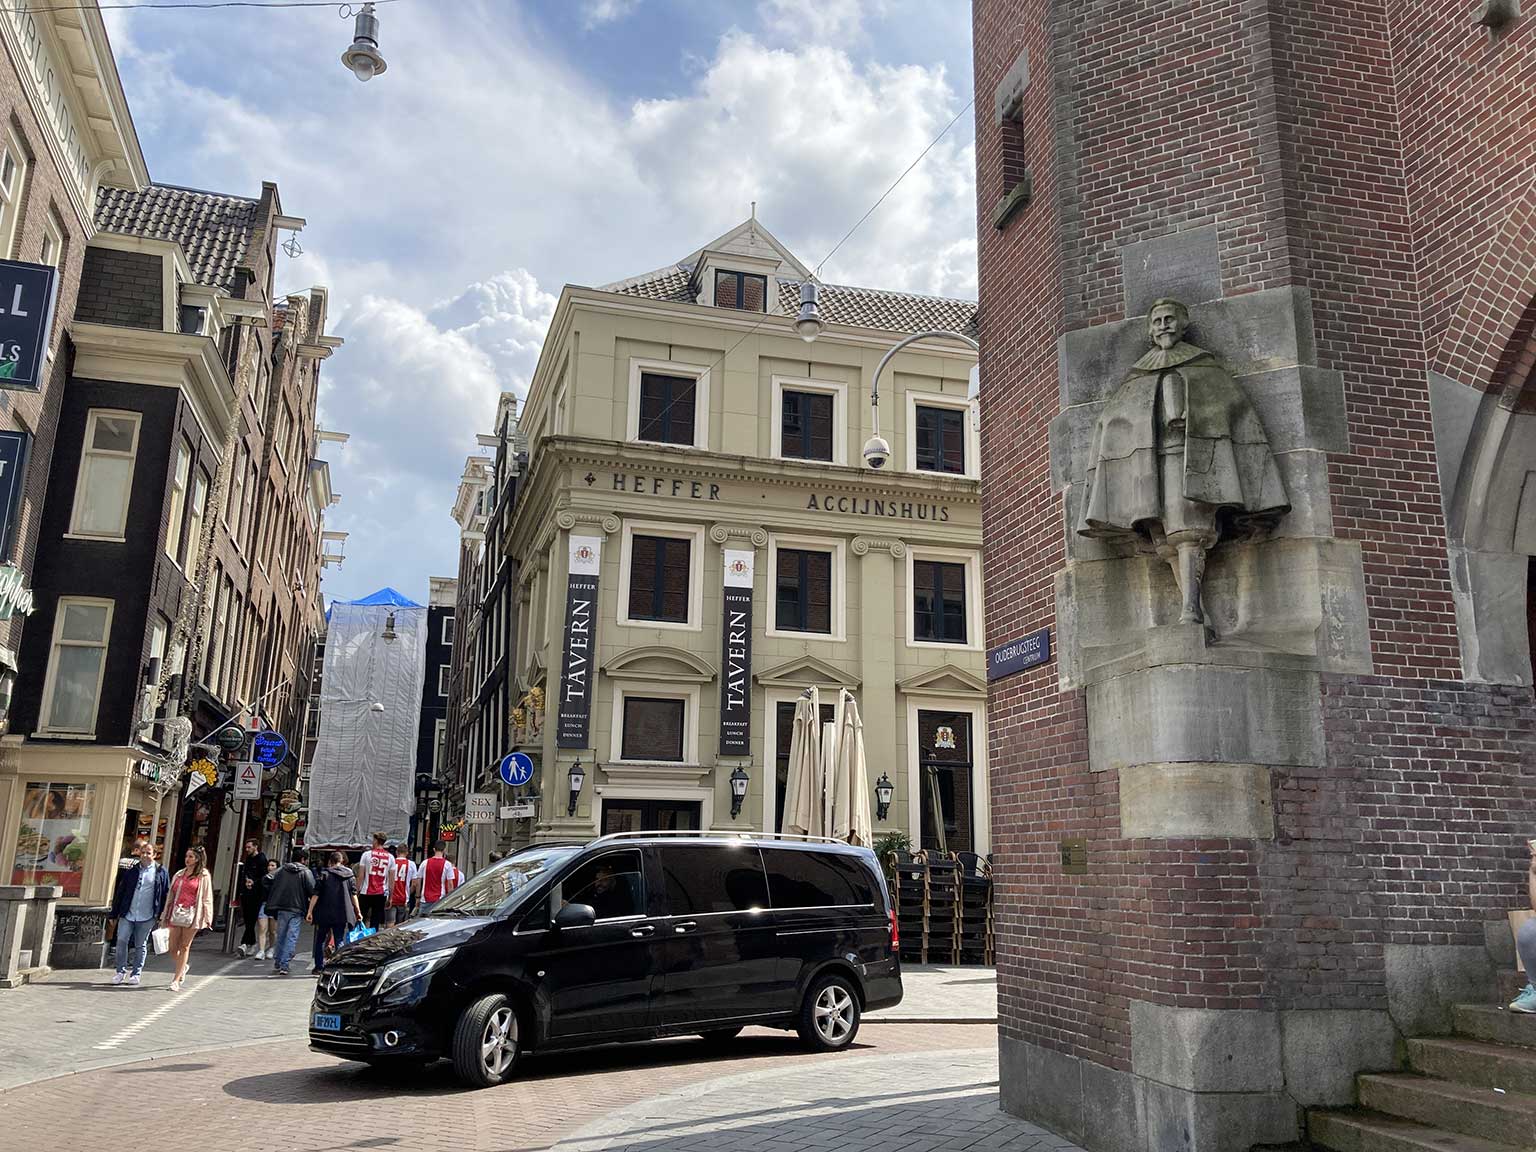 Accijnshuis, nu Café Heffer, op de Oudebrugsteeg hoek Beursstraat, Amsterdam